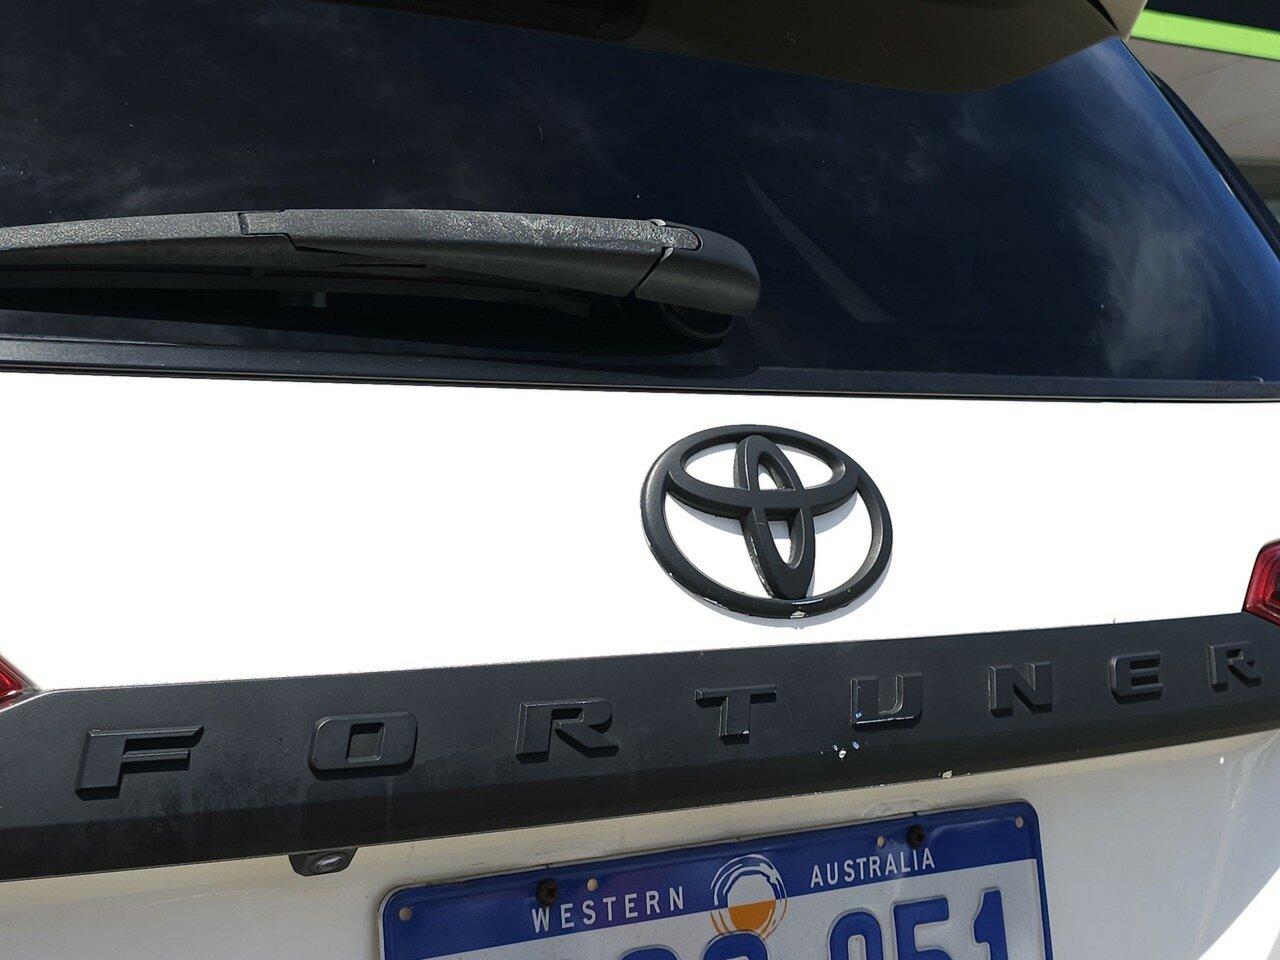 Toyota Fortuner image 3